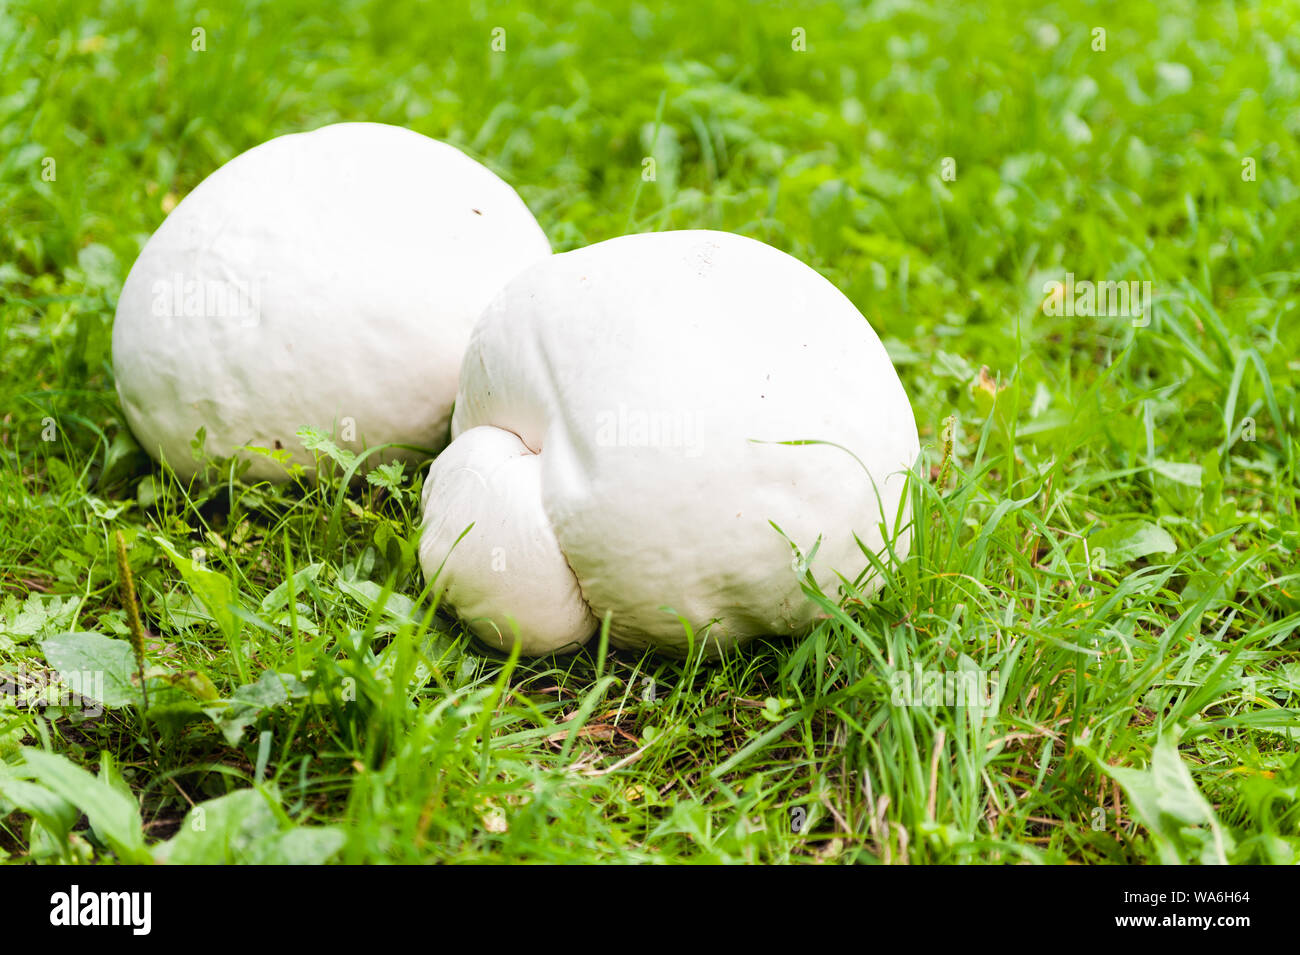 Giant white puffball mushroom on grass Stock Photo